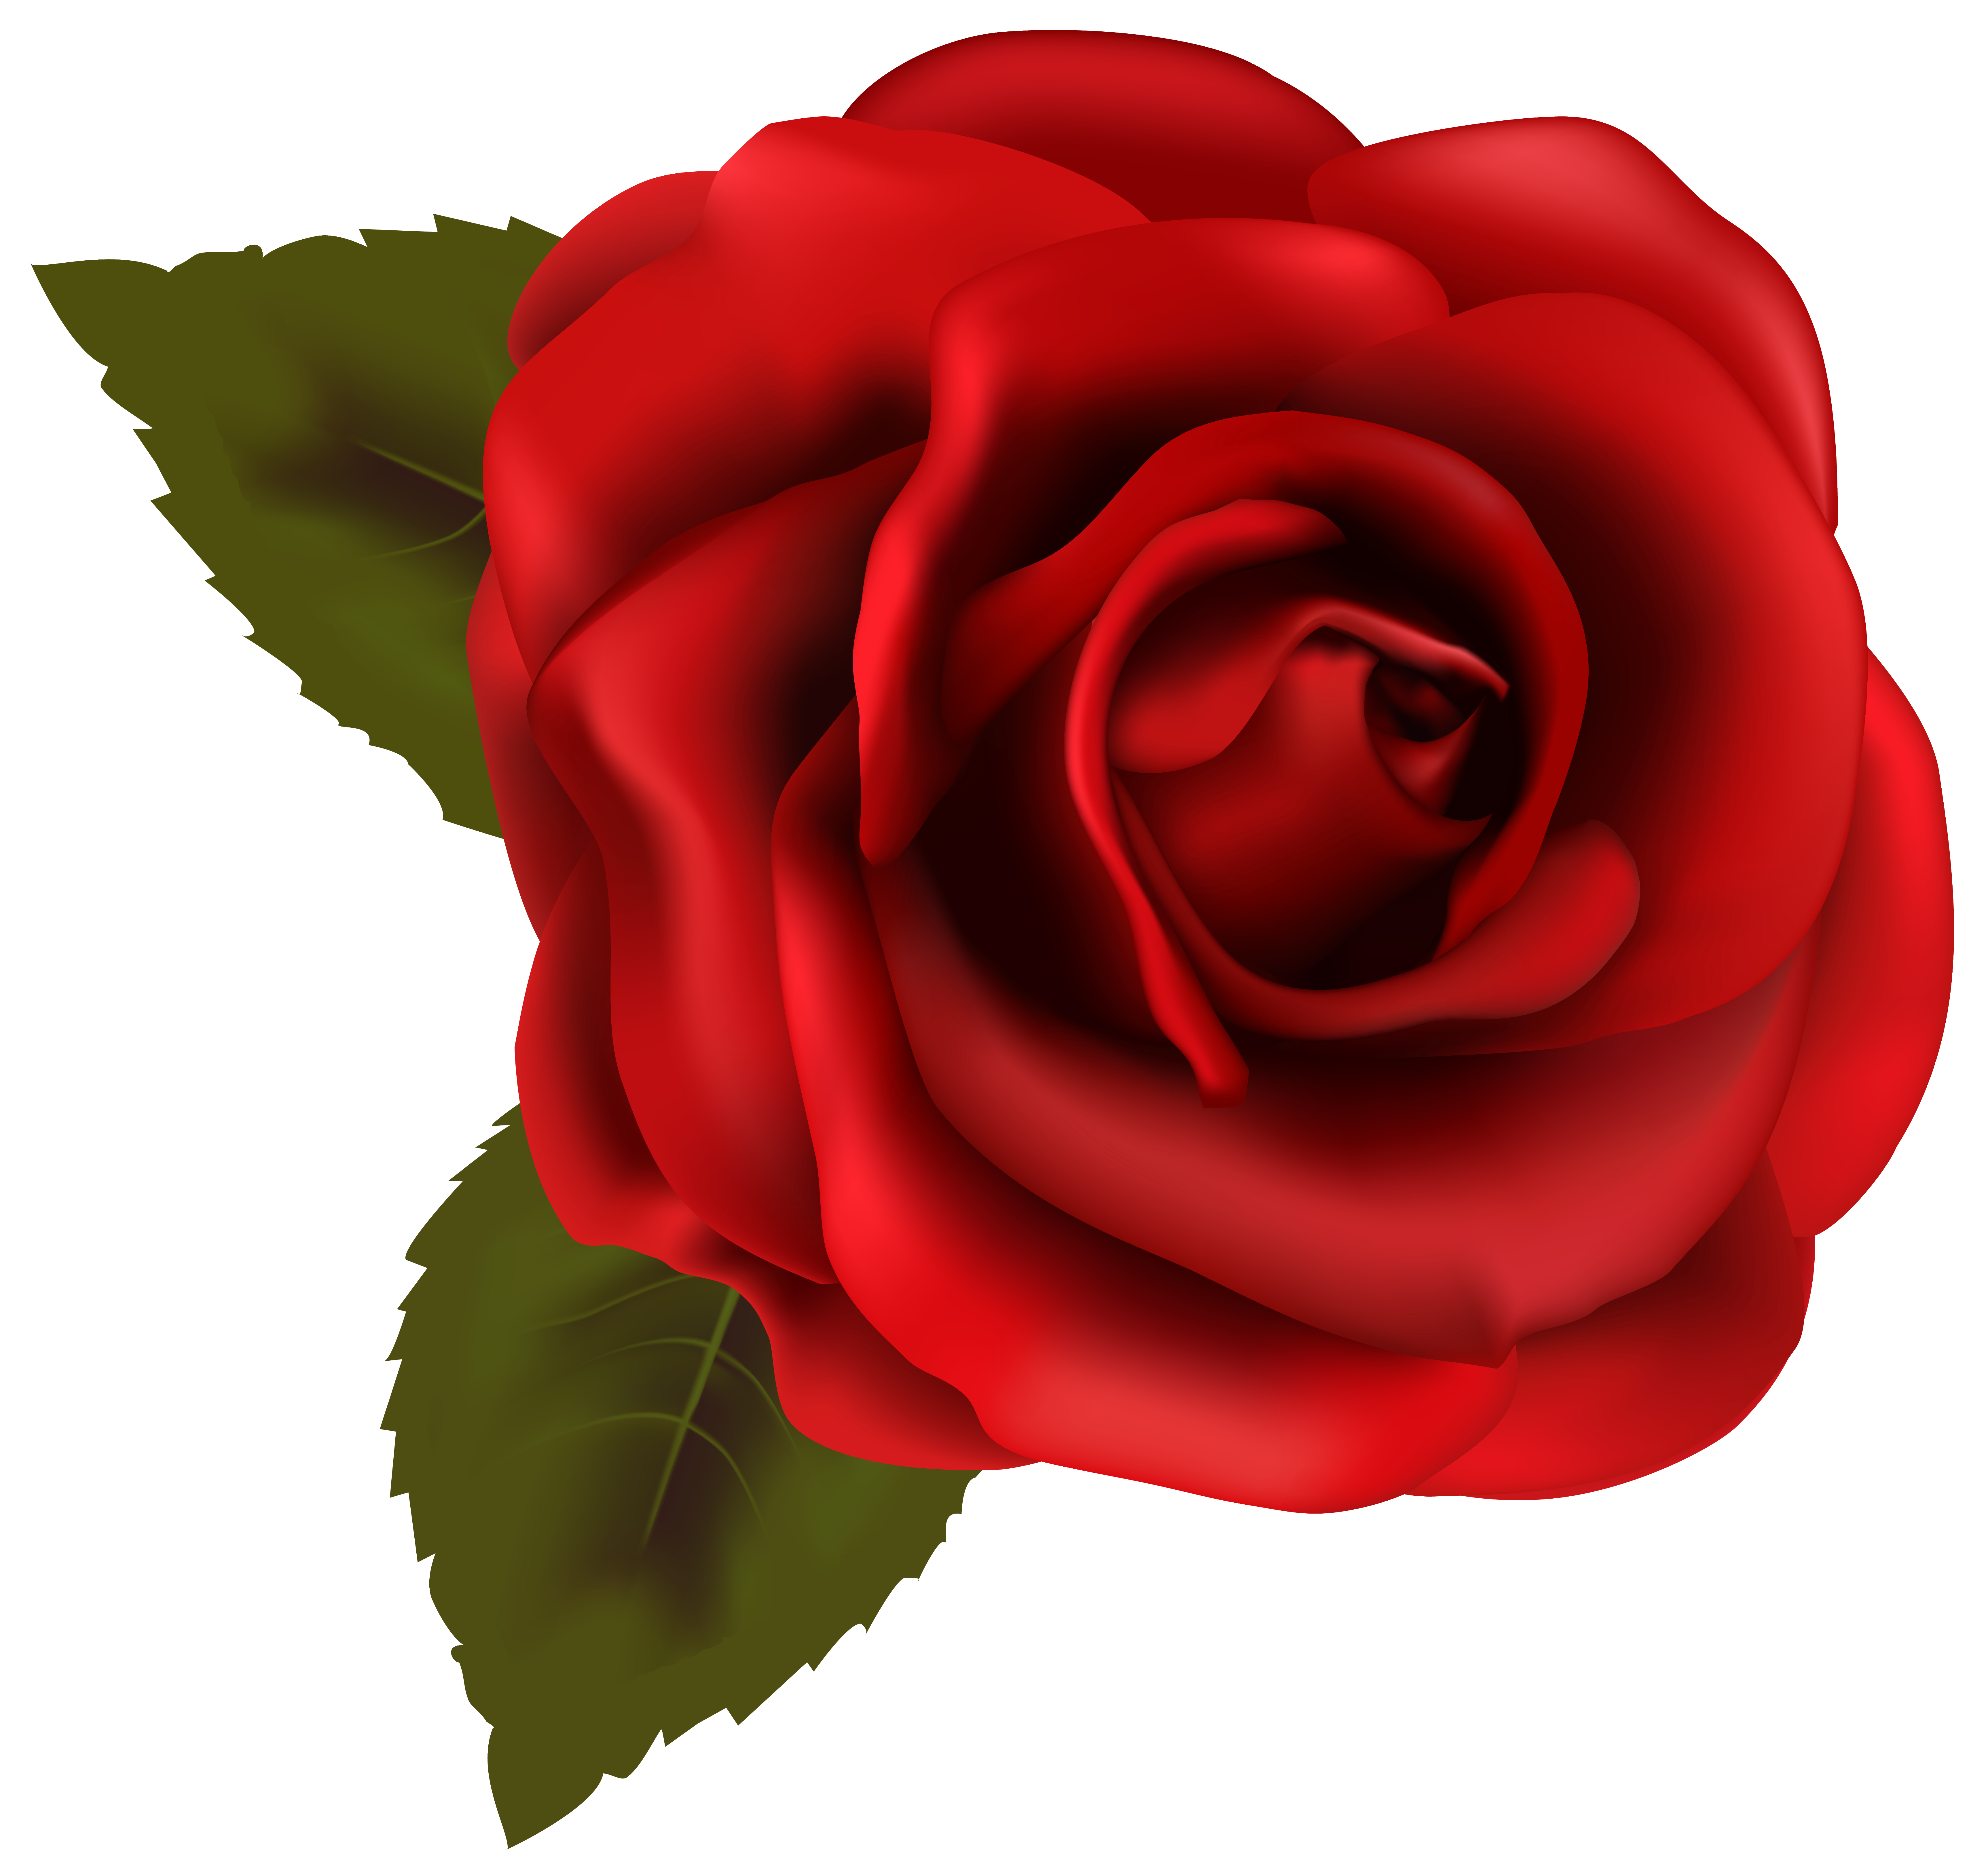 Beautiful Red Rose Transparent PNG Clip Art Image